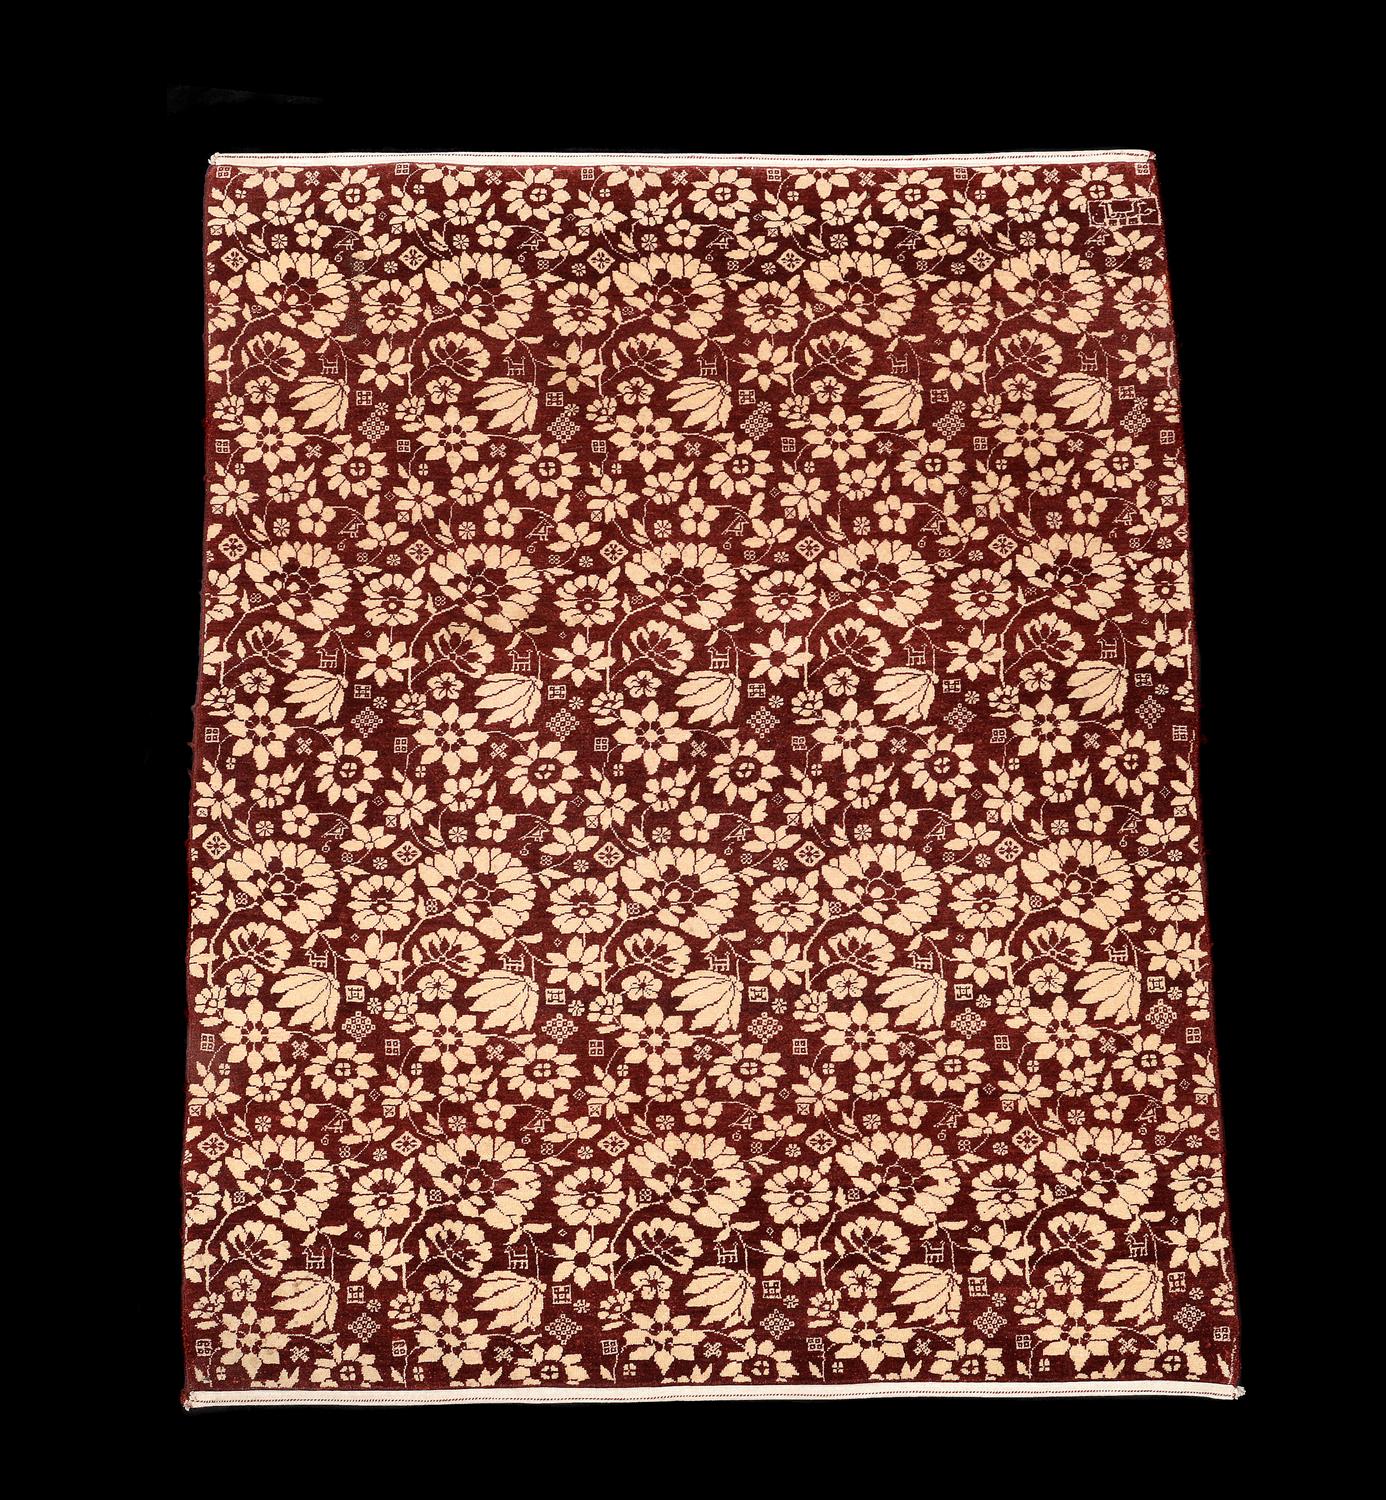 A handwoven rug